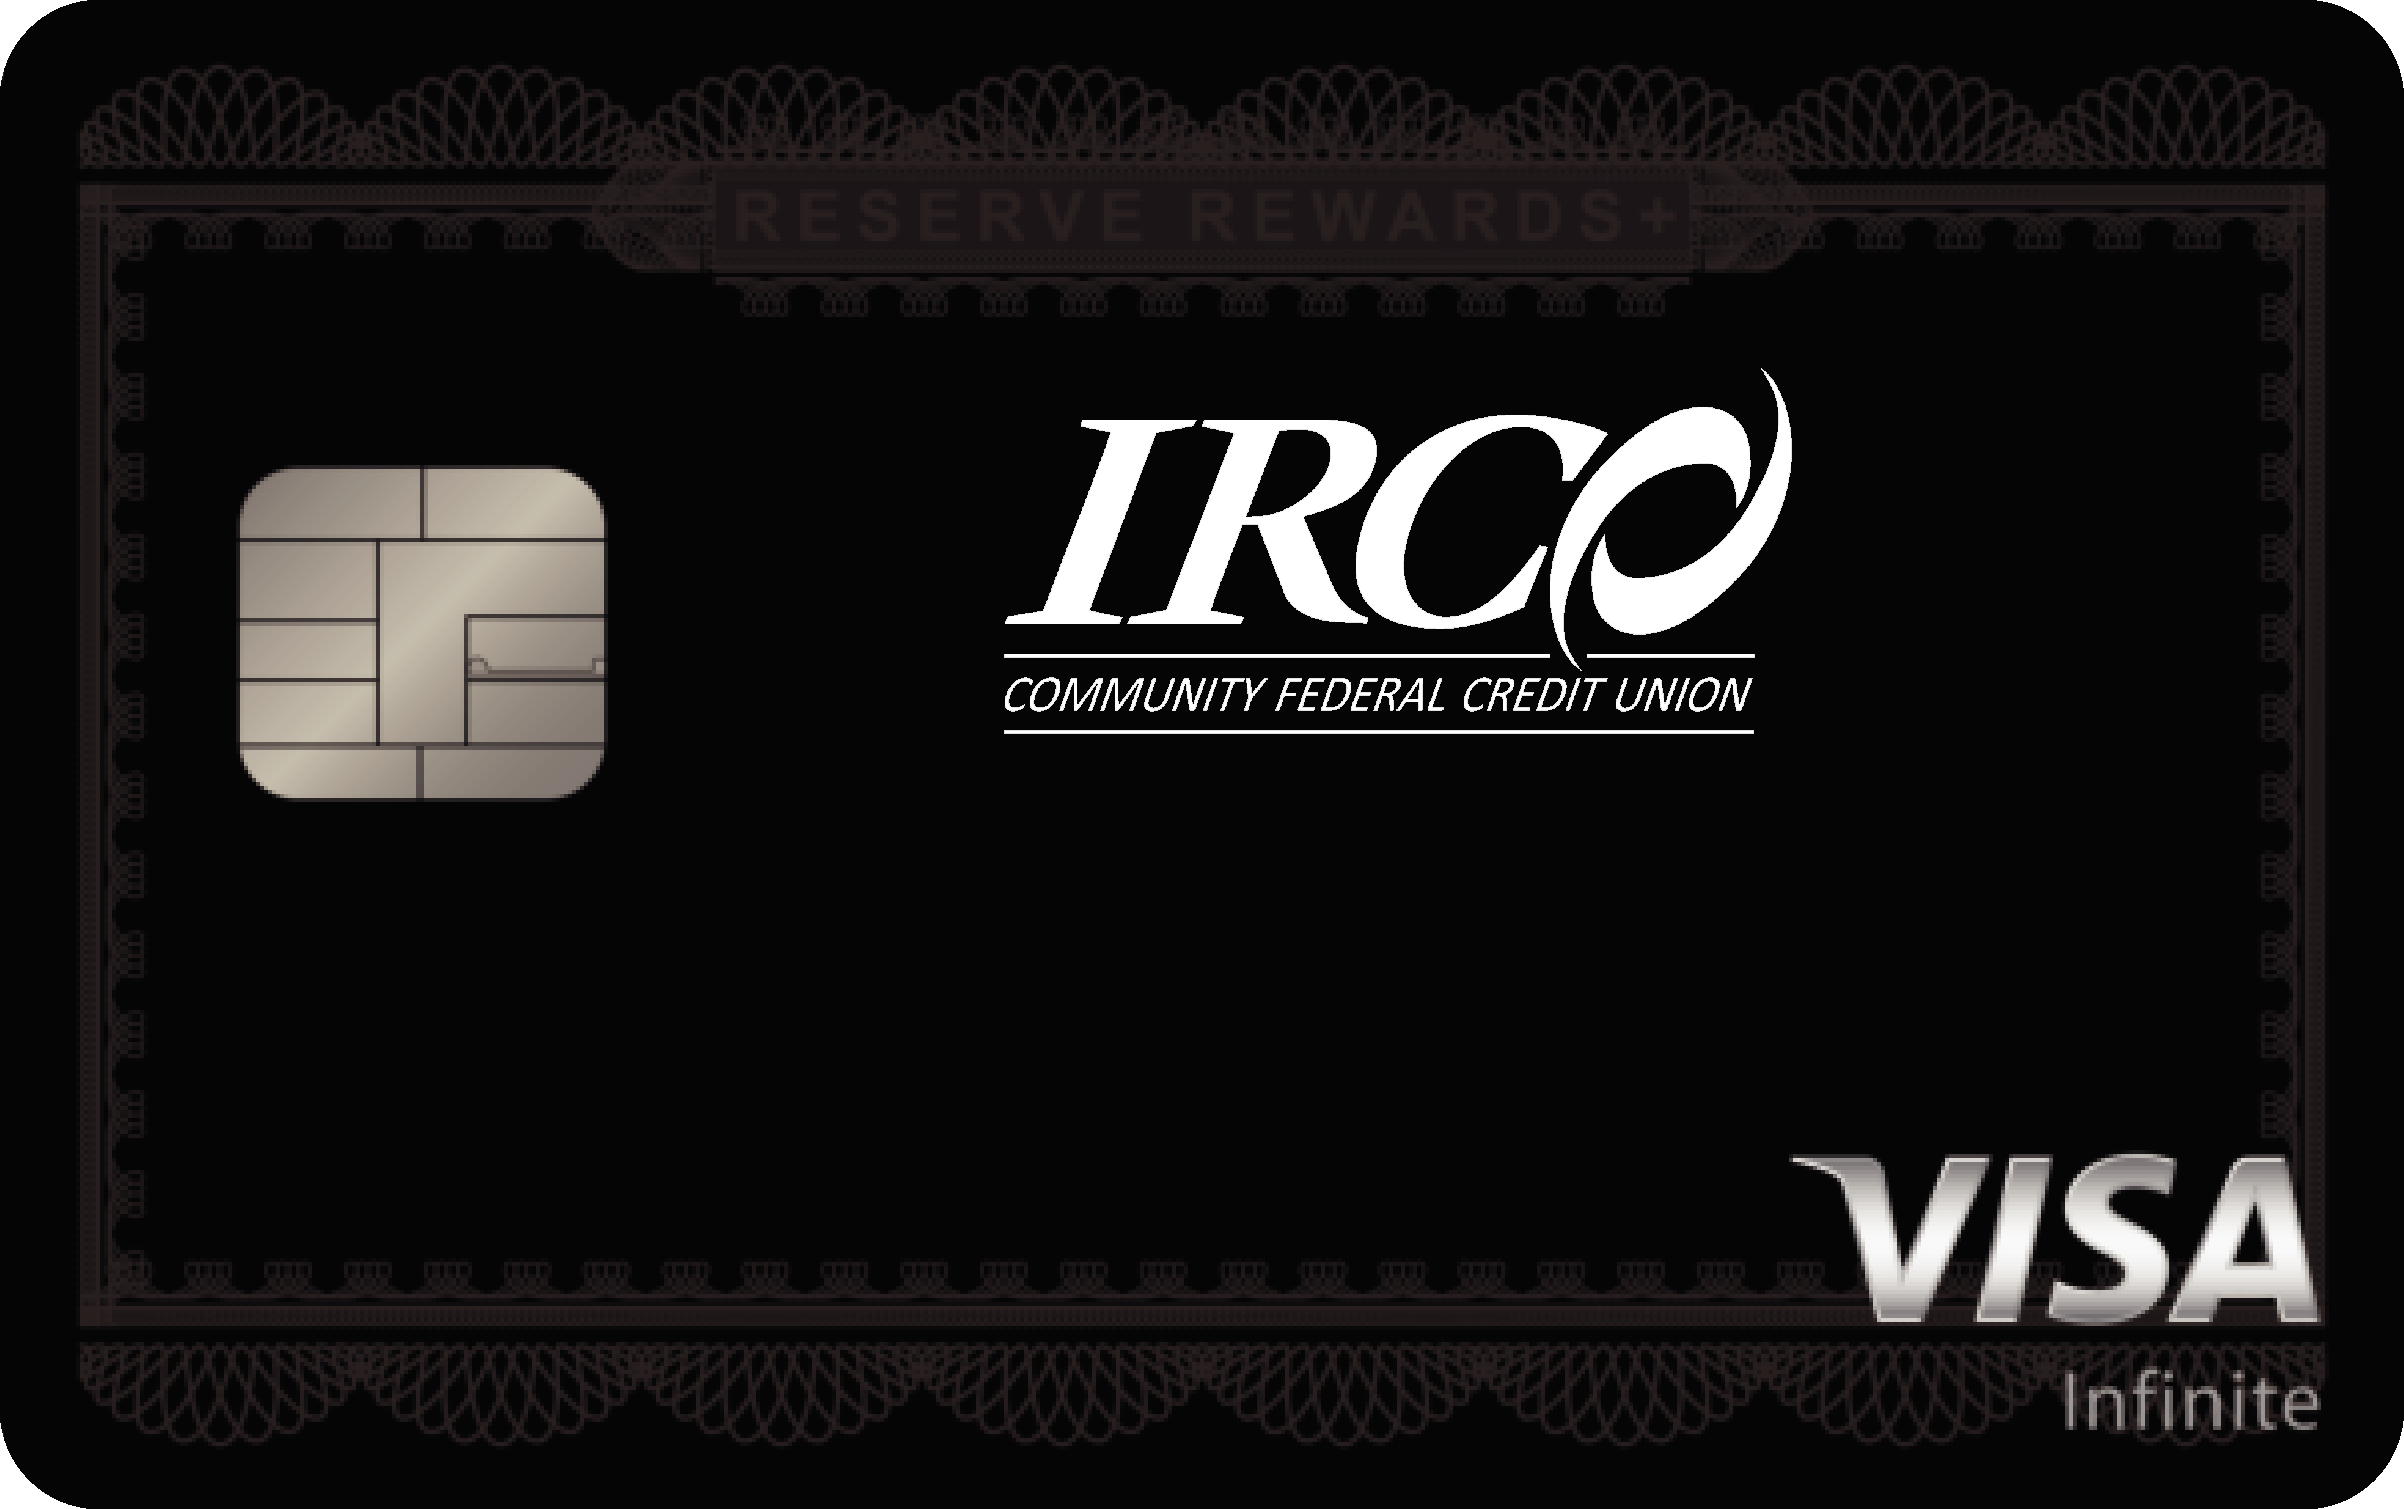 IRCO Community Federal Credit Union